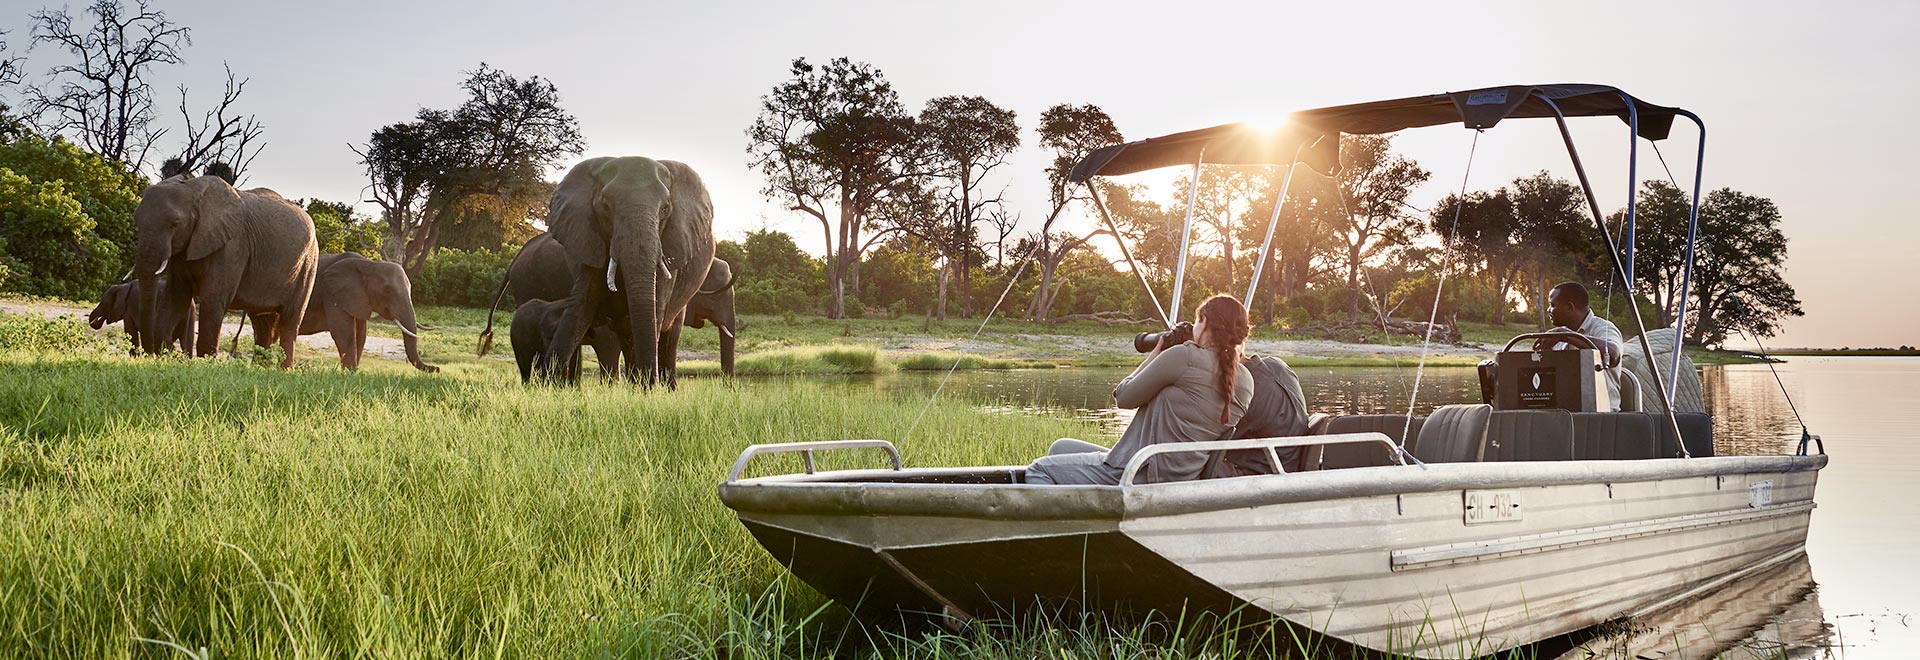 Africa Botswana Safari in Style Elephants Boat mh